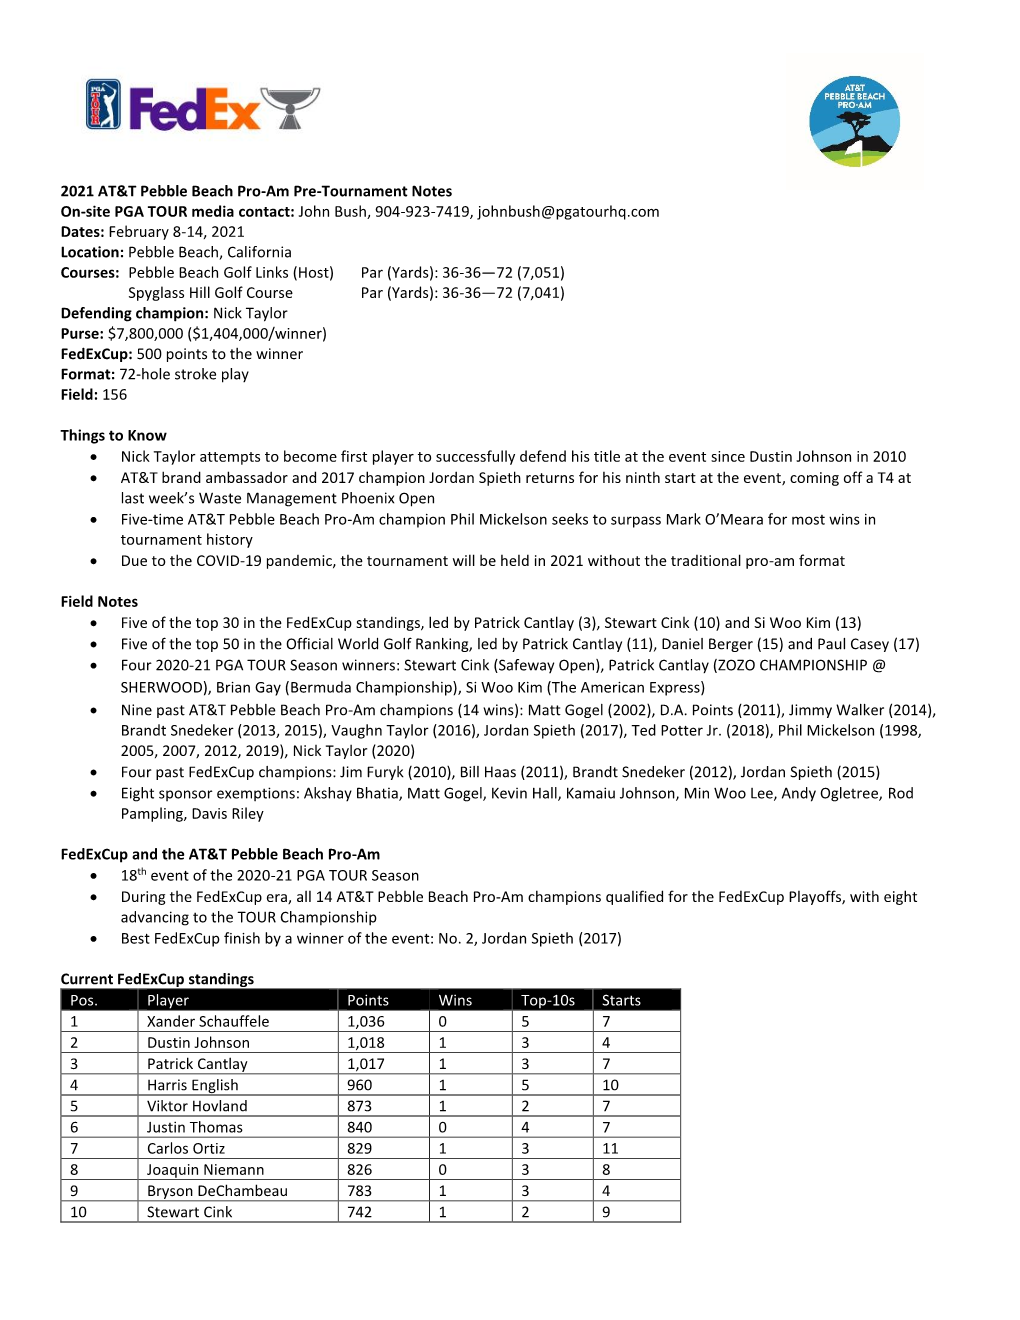 2021 AT&T Pebble Beach Pro-Am Pre-Tournament Notes On-Site PGA TOUR Media Contact